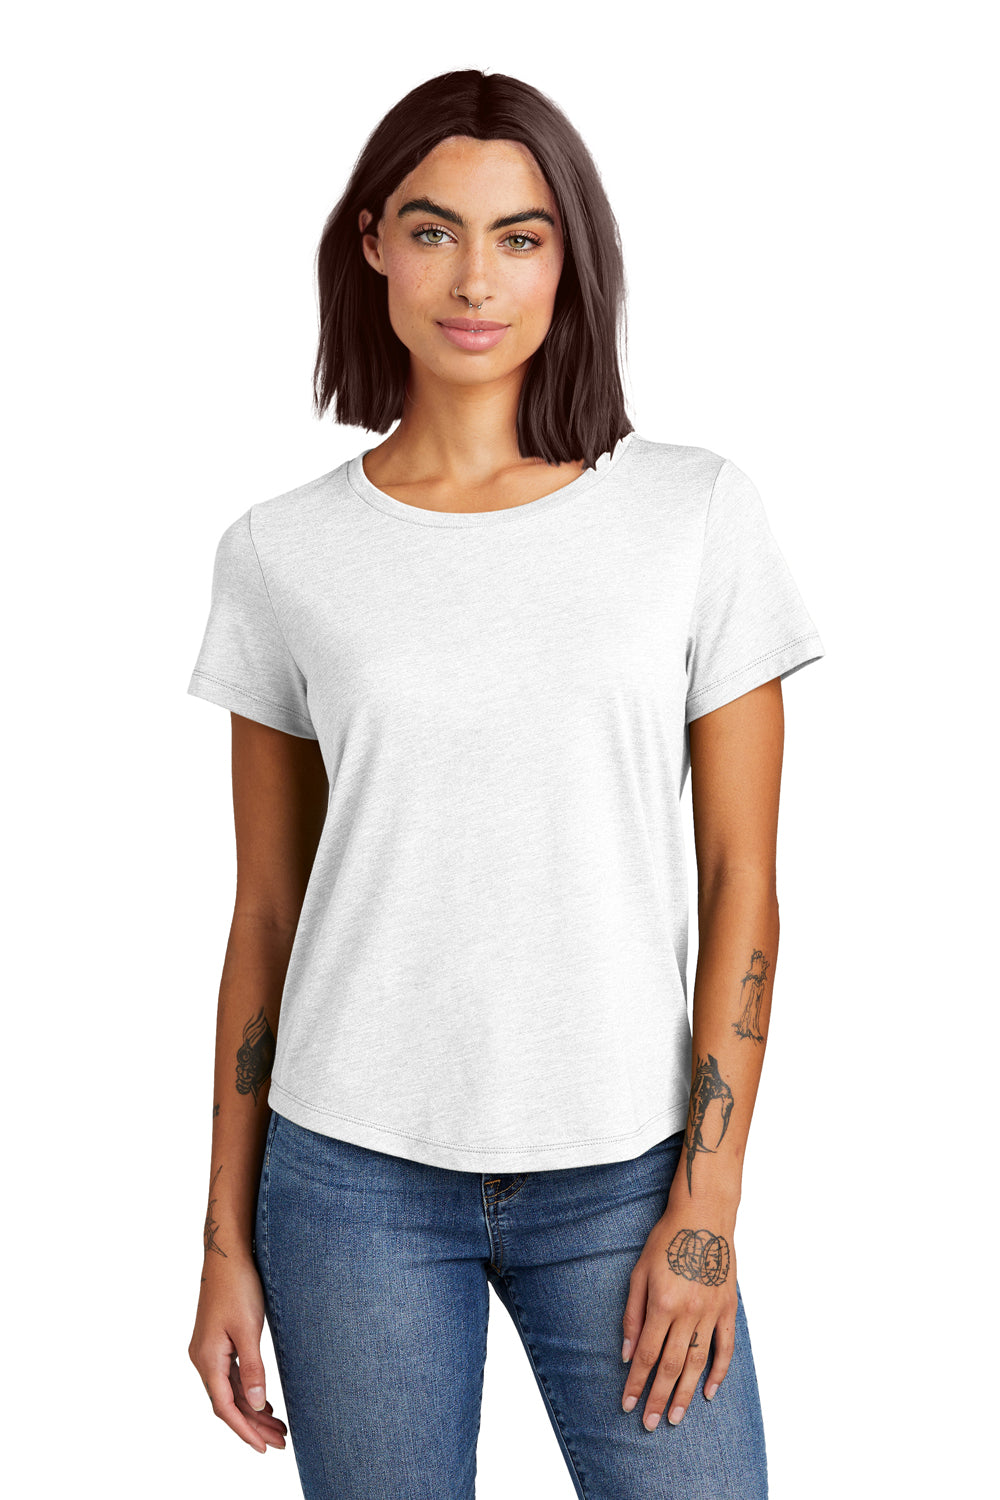 Allmade AL2015 Womens Short Sleeve Scoop Neck T Shirt Fairly White Model Front